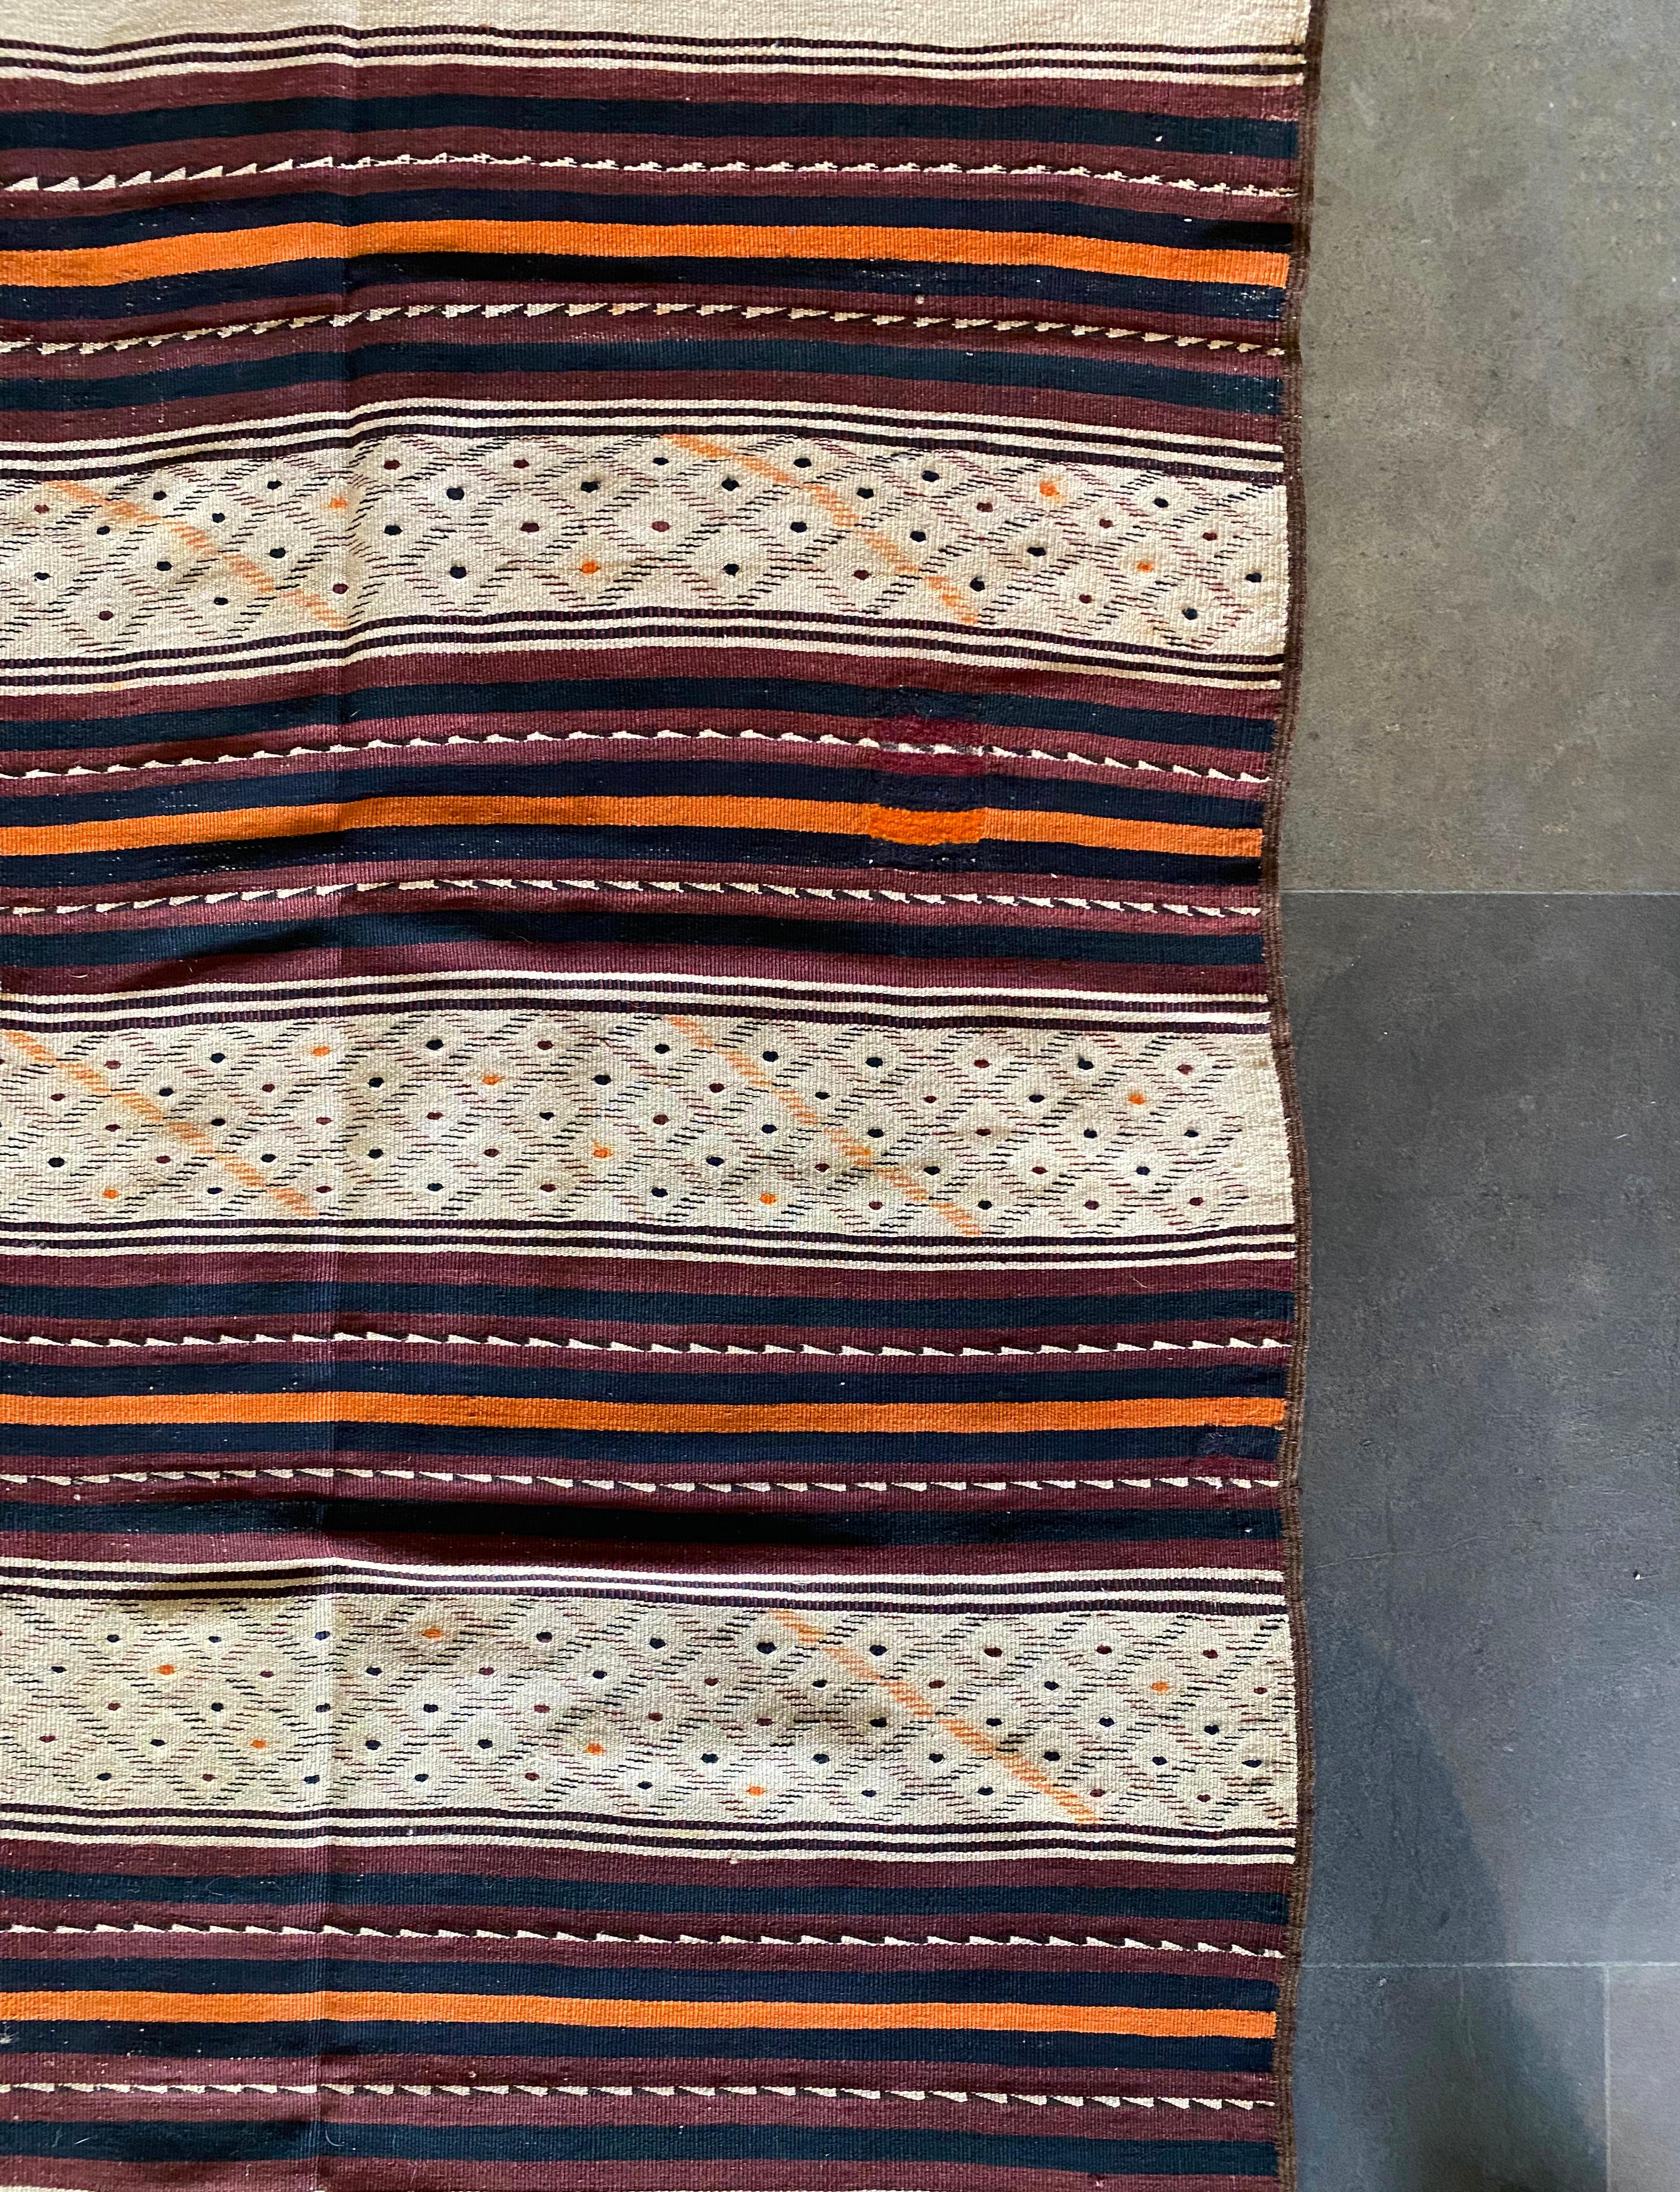 Uzbekistan Tartari Safid Kilim Rug from Wool, Early 20th Century For Sale 3